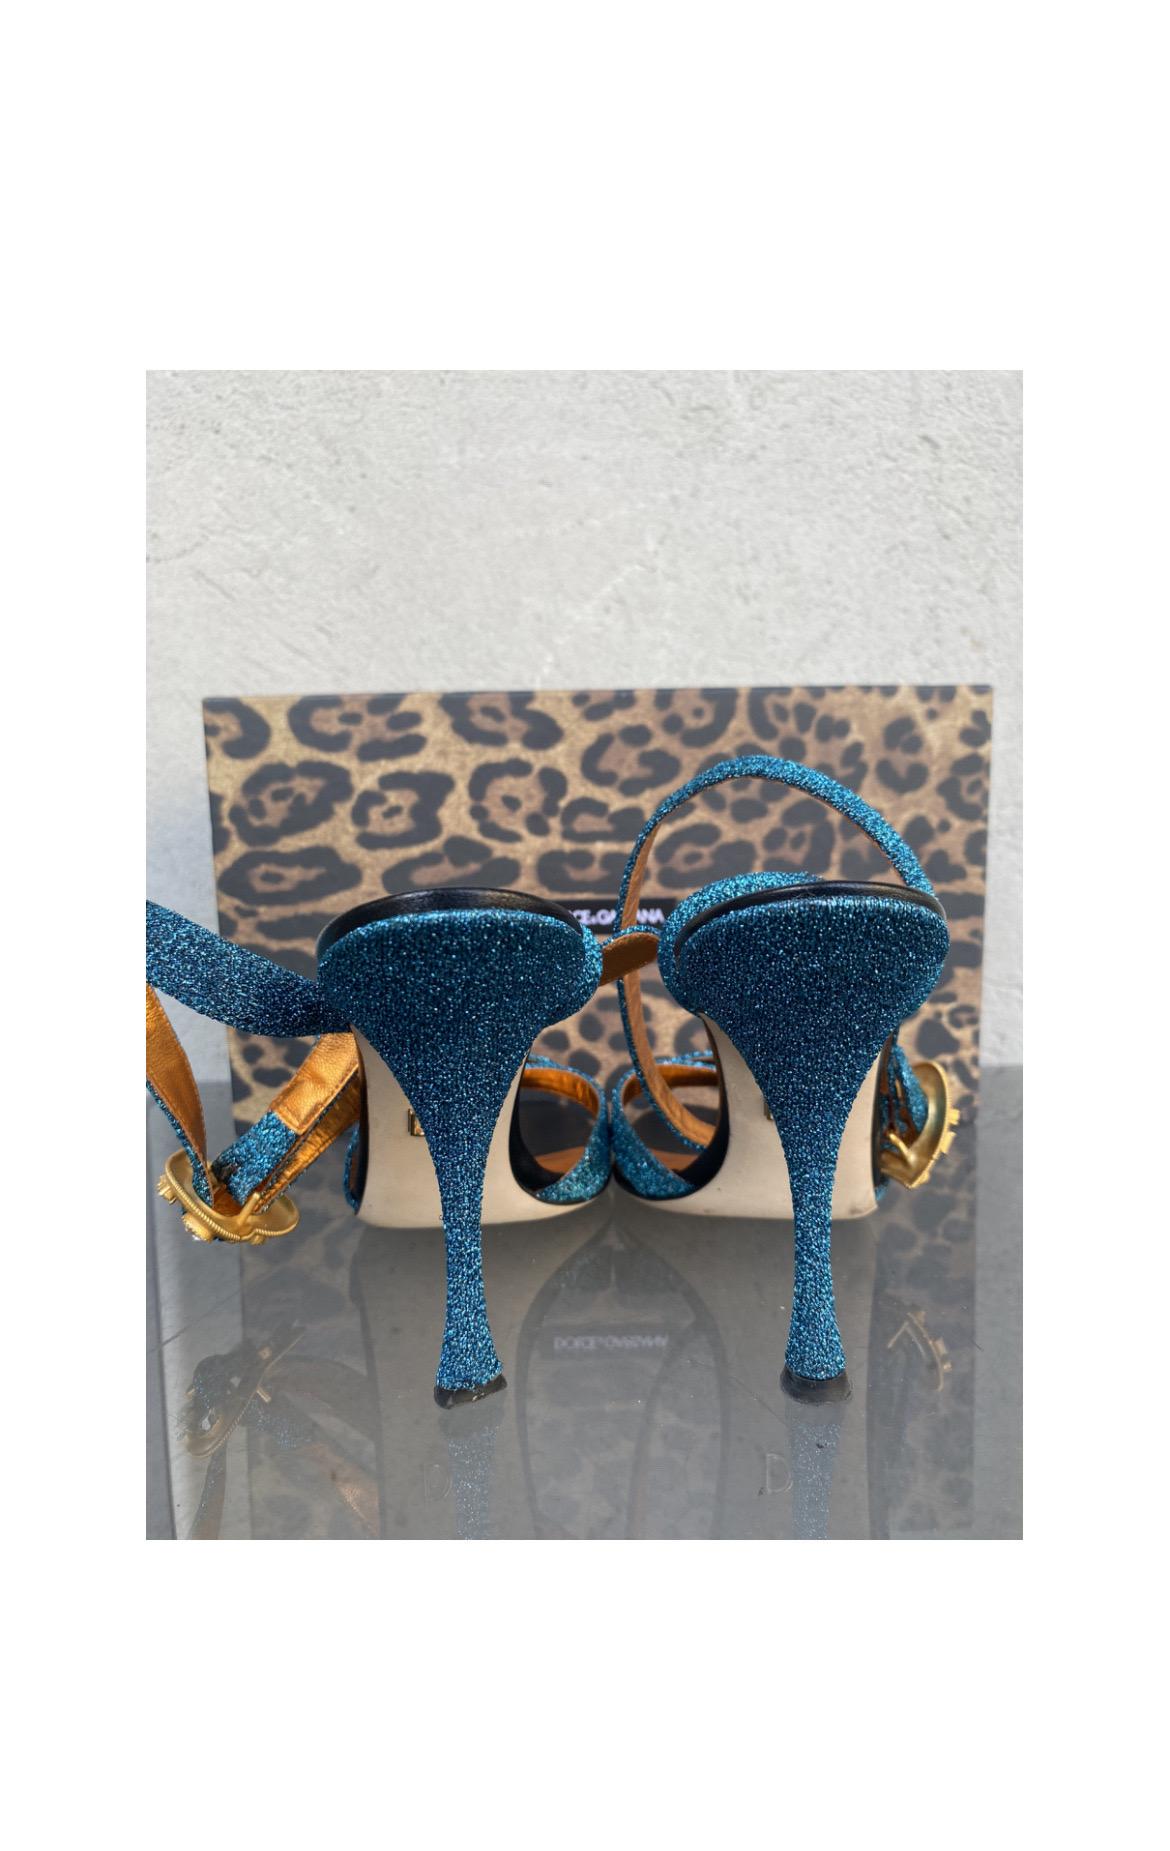 Women's or Men's Dolce&Gabbana sandals. For Sale